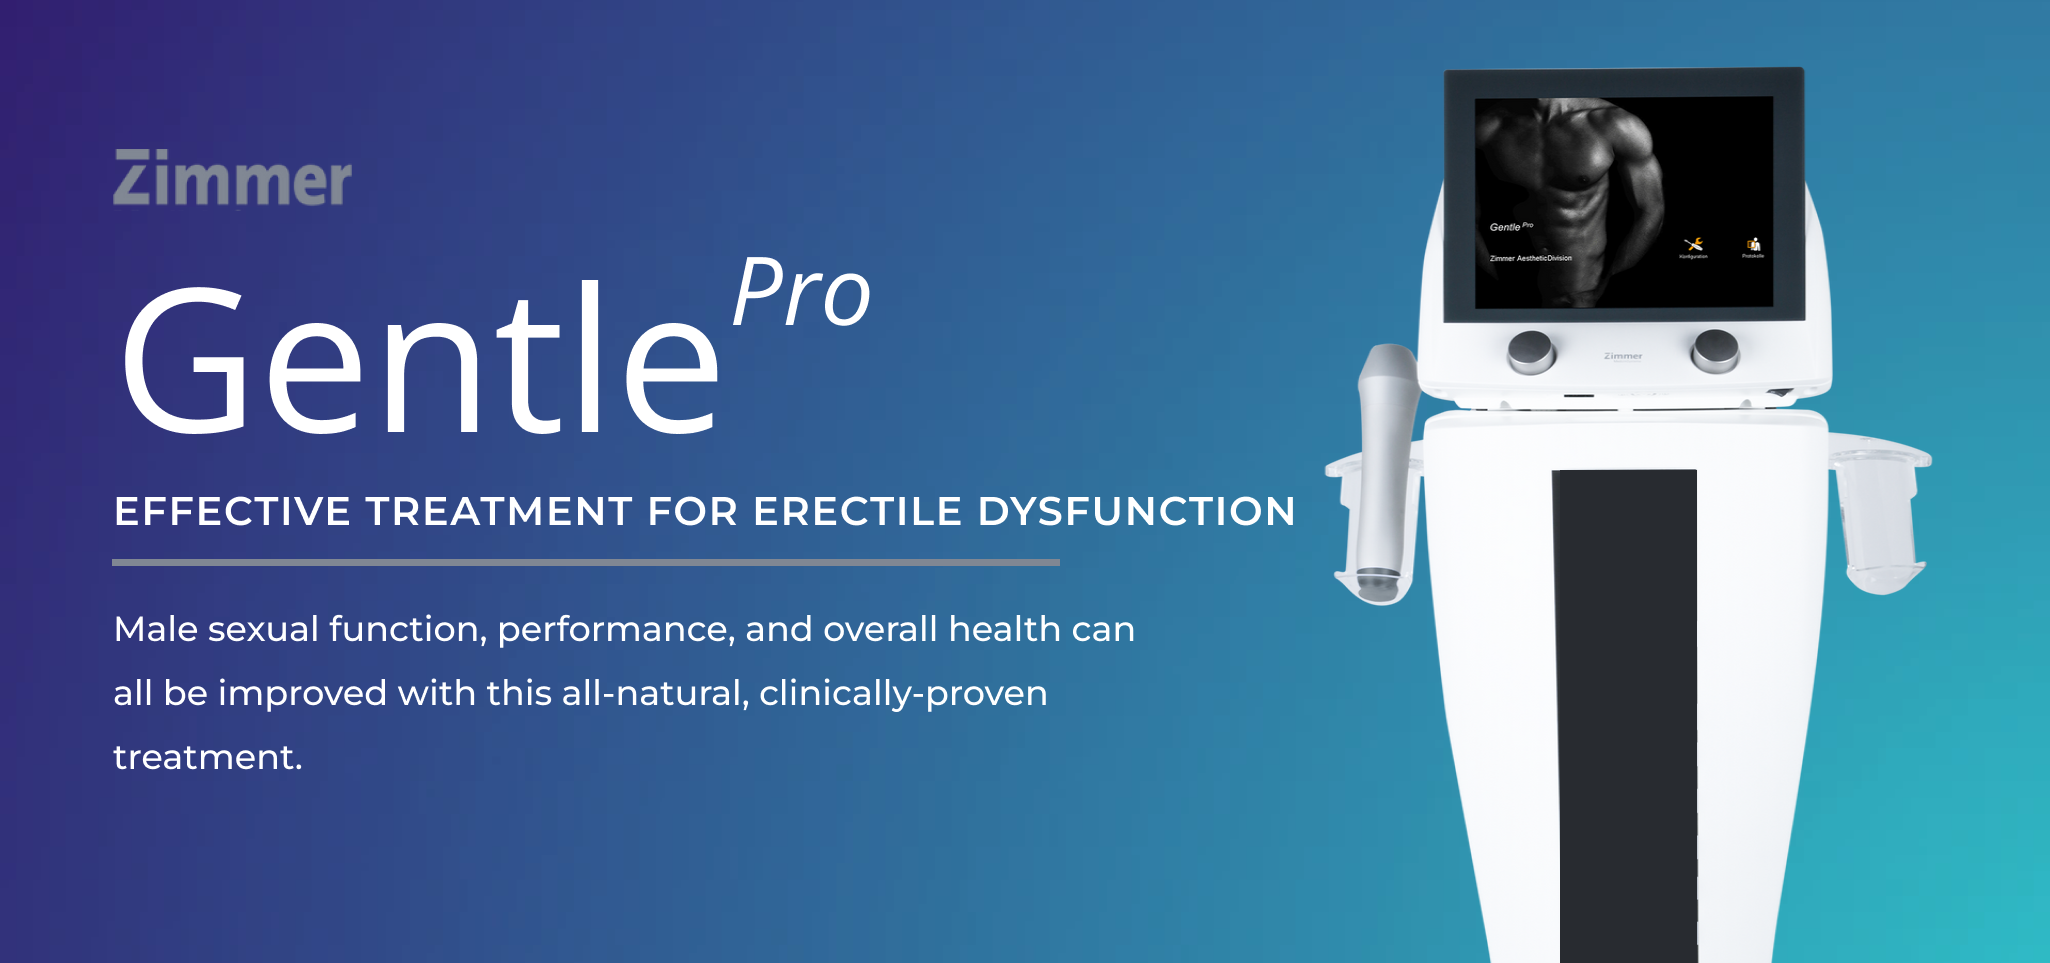 Zimmer GentlePro Treatment for Erectile Dysfunction